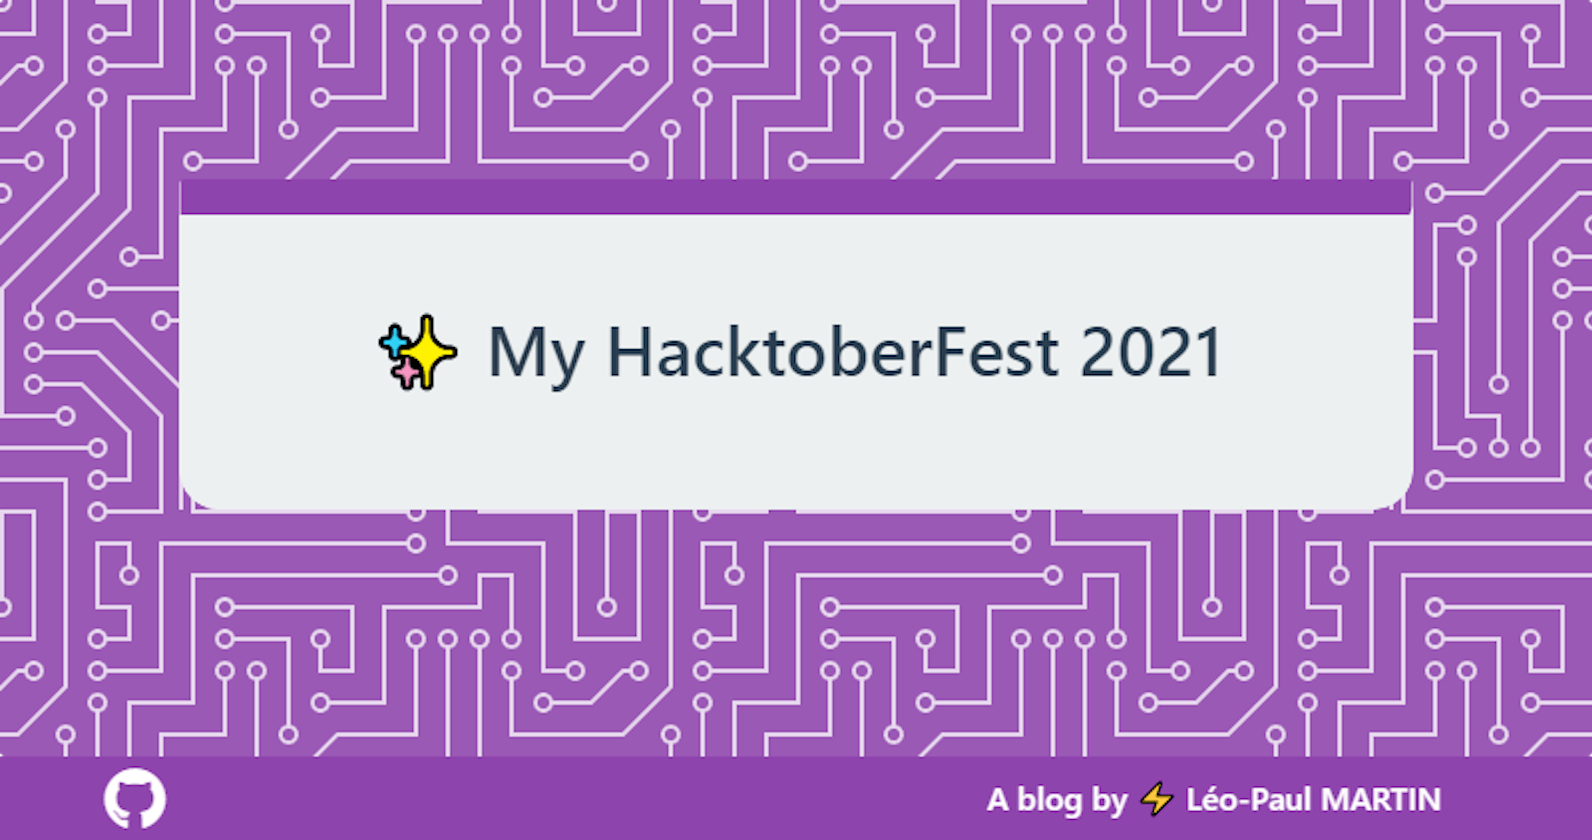 ✨ My HacktoberFest 2021